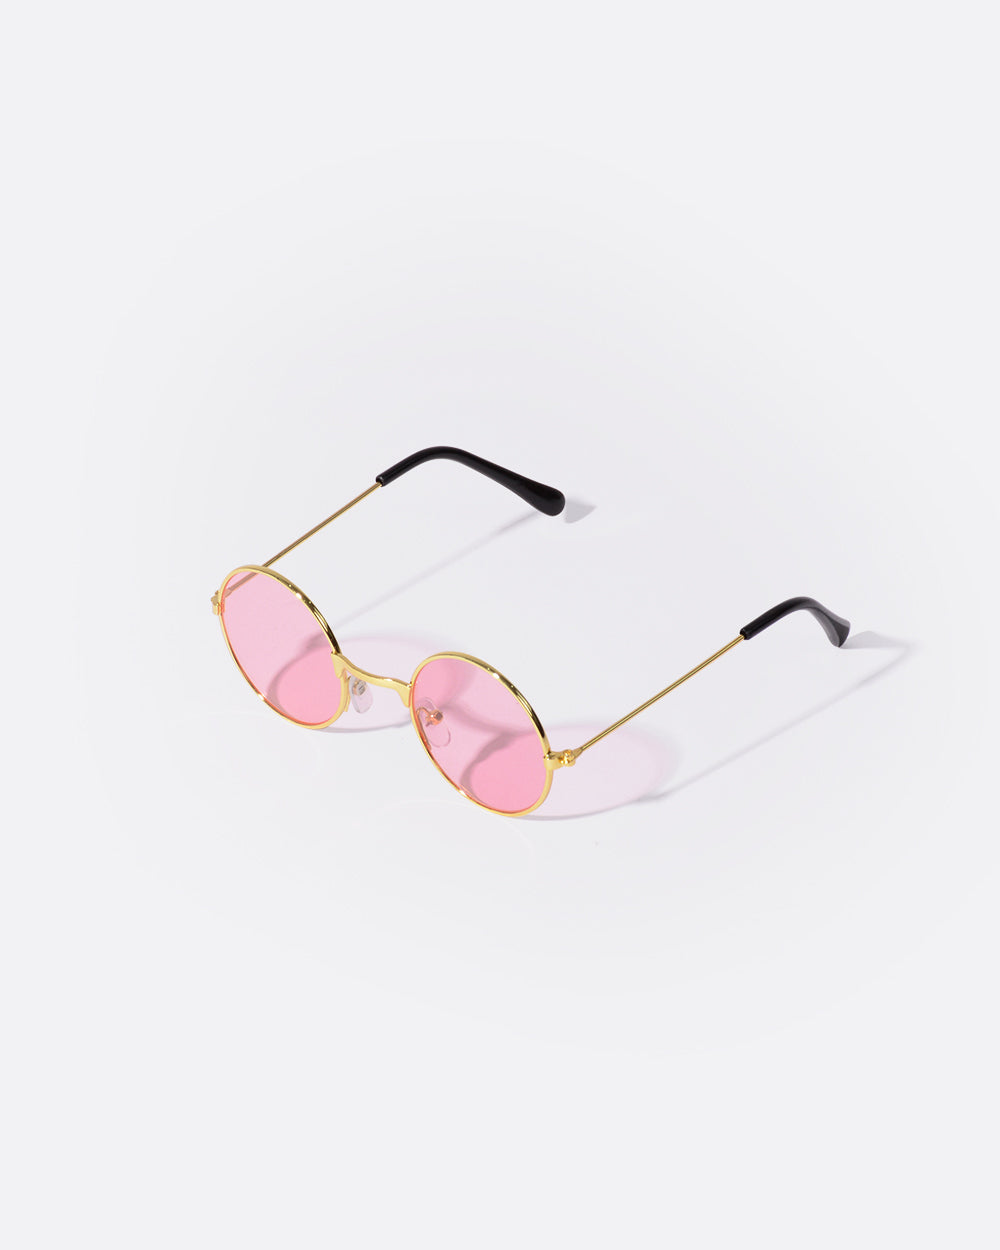 Tinted Lens Dog Glasses - Pink